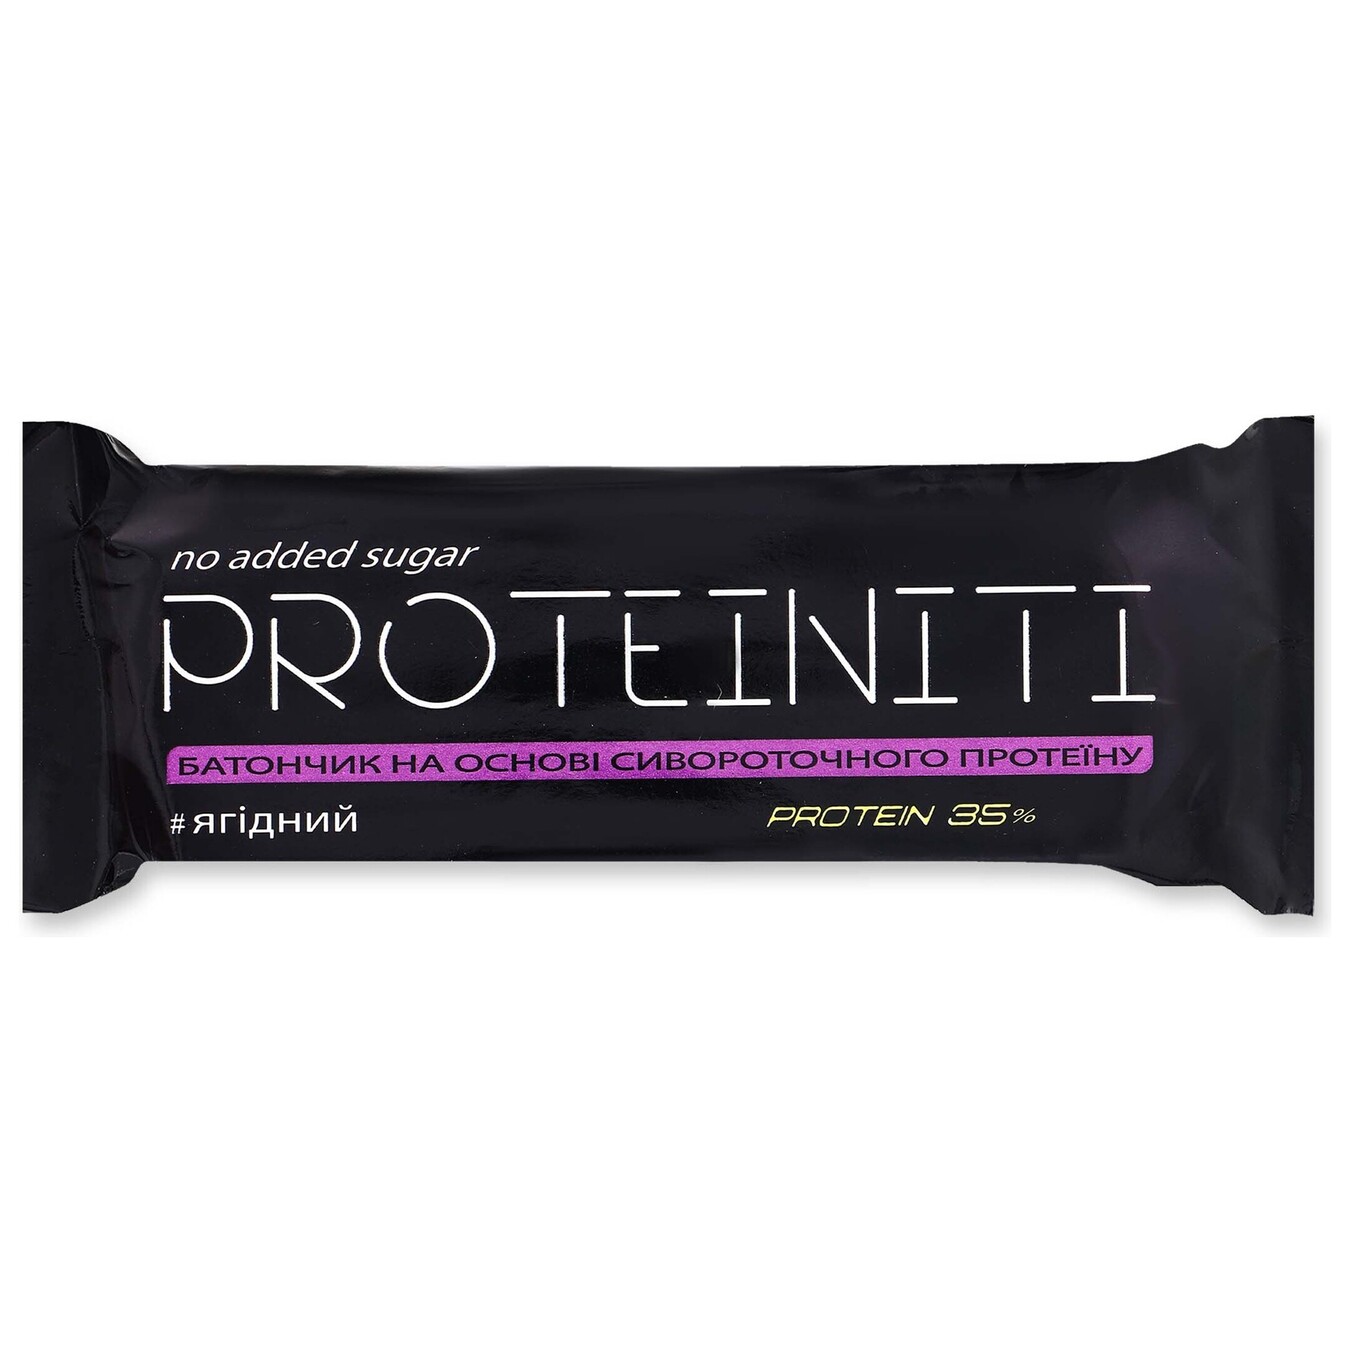 Proteiniti berry protein bar 40g